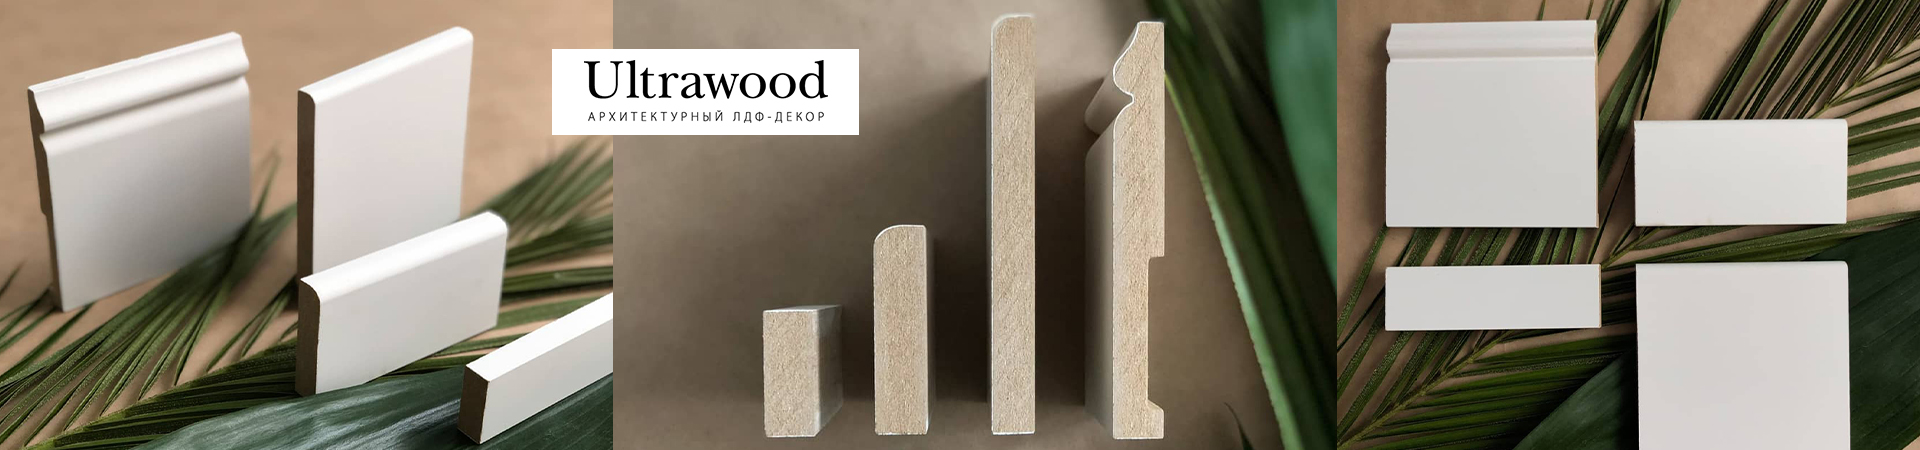 Архитектурный лепной декор Ultrawood - снижение цен до 70% и 4 новинки 2021 года.